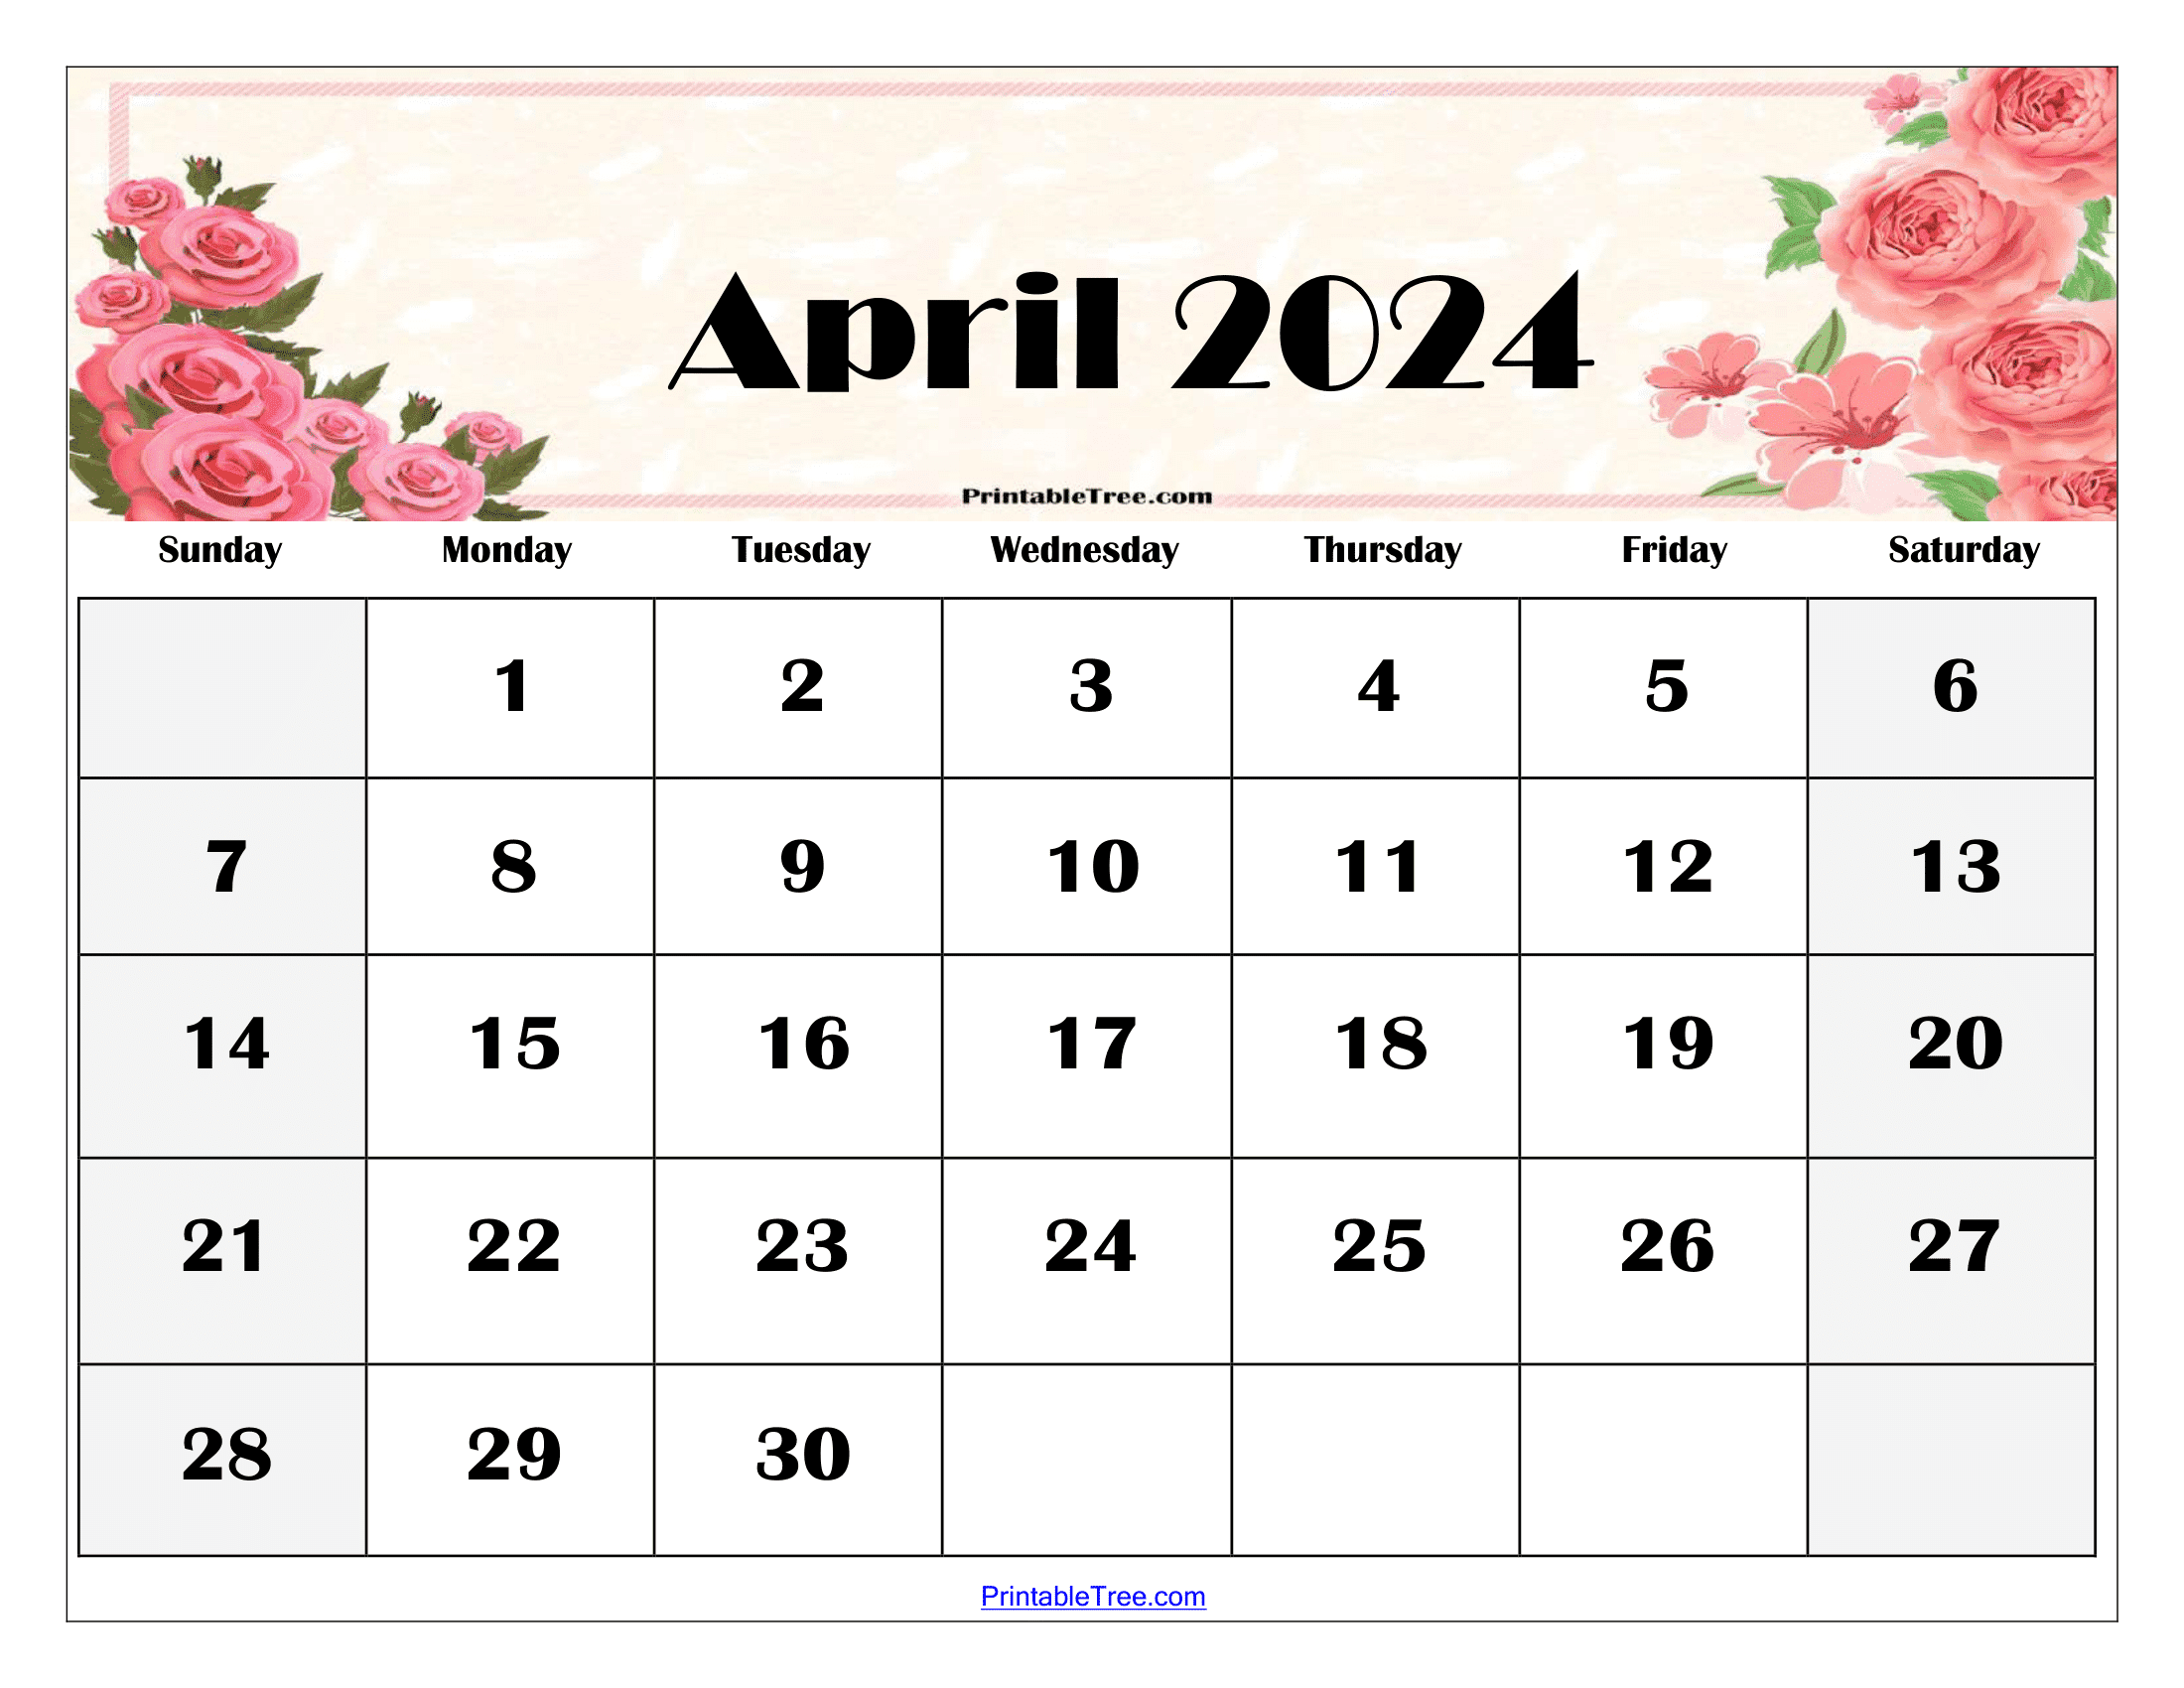 April 2024 Calendar Printable April Blank Calendar 2024 Easy To Use - Free Printable Calendar April 2024 To April 2024